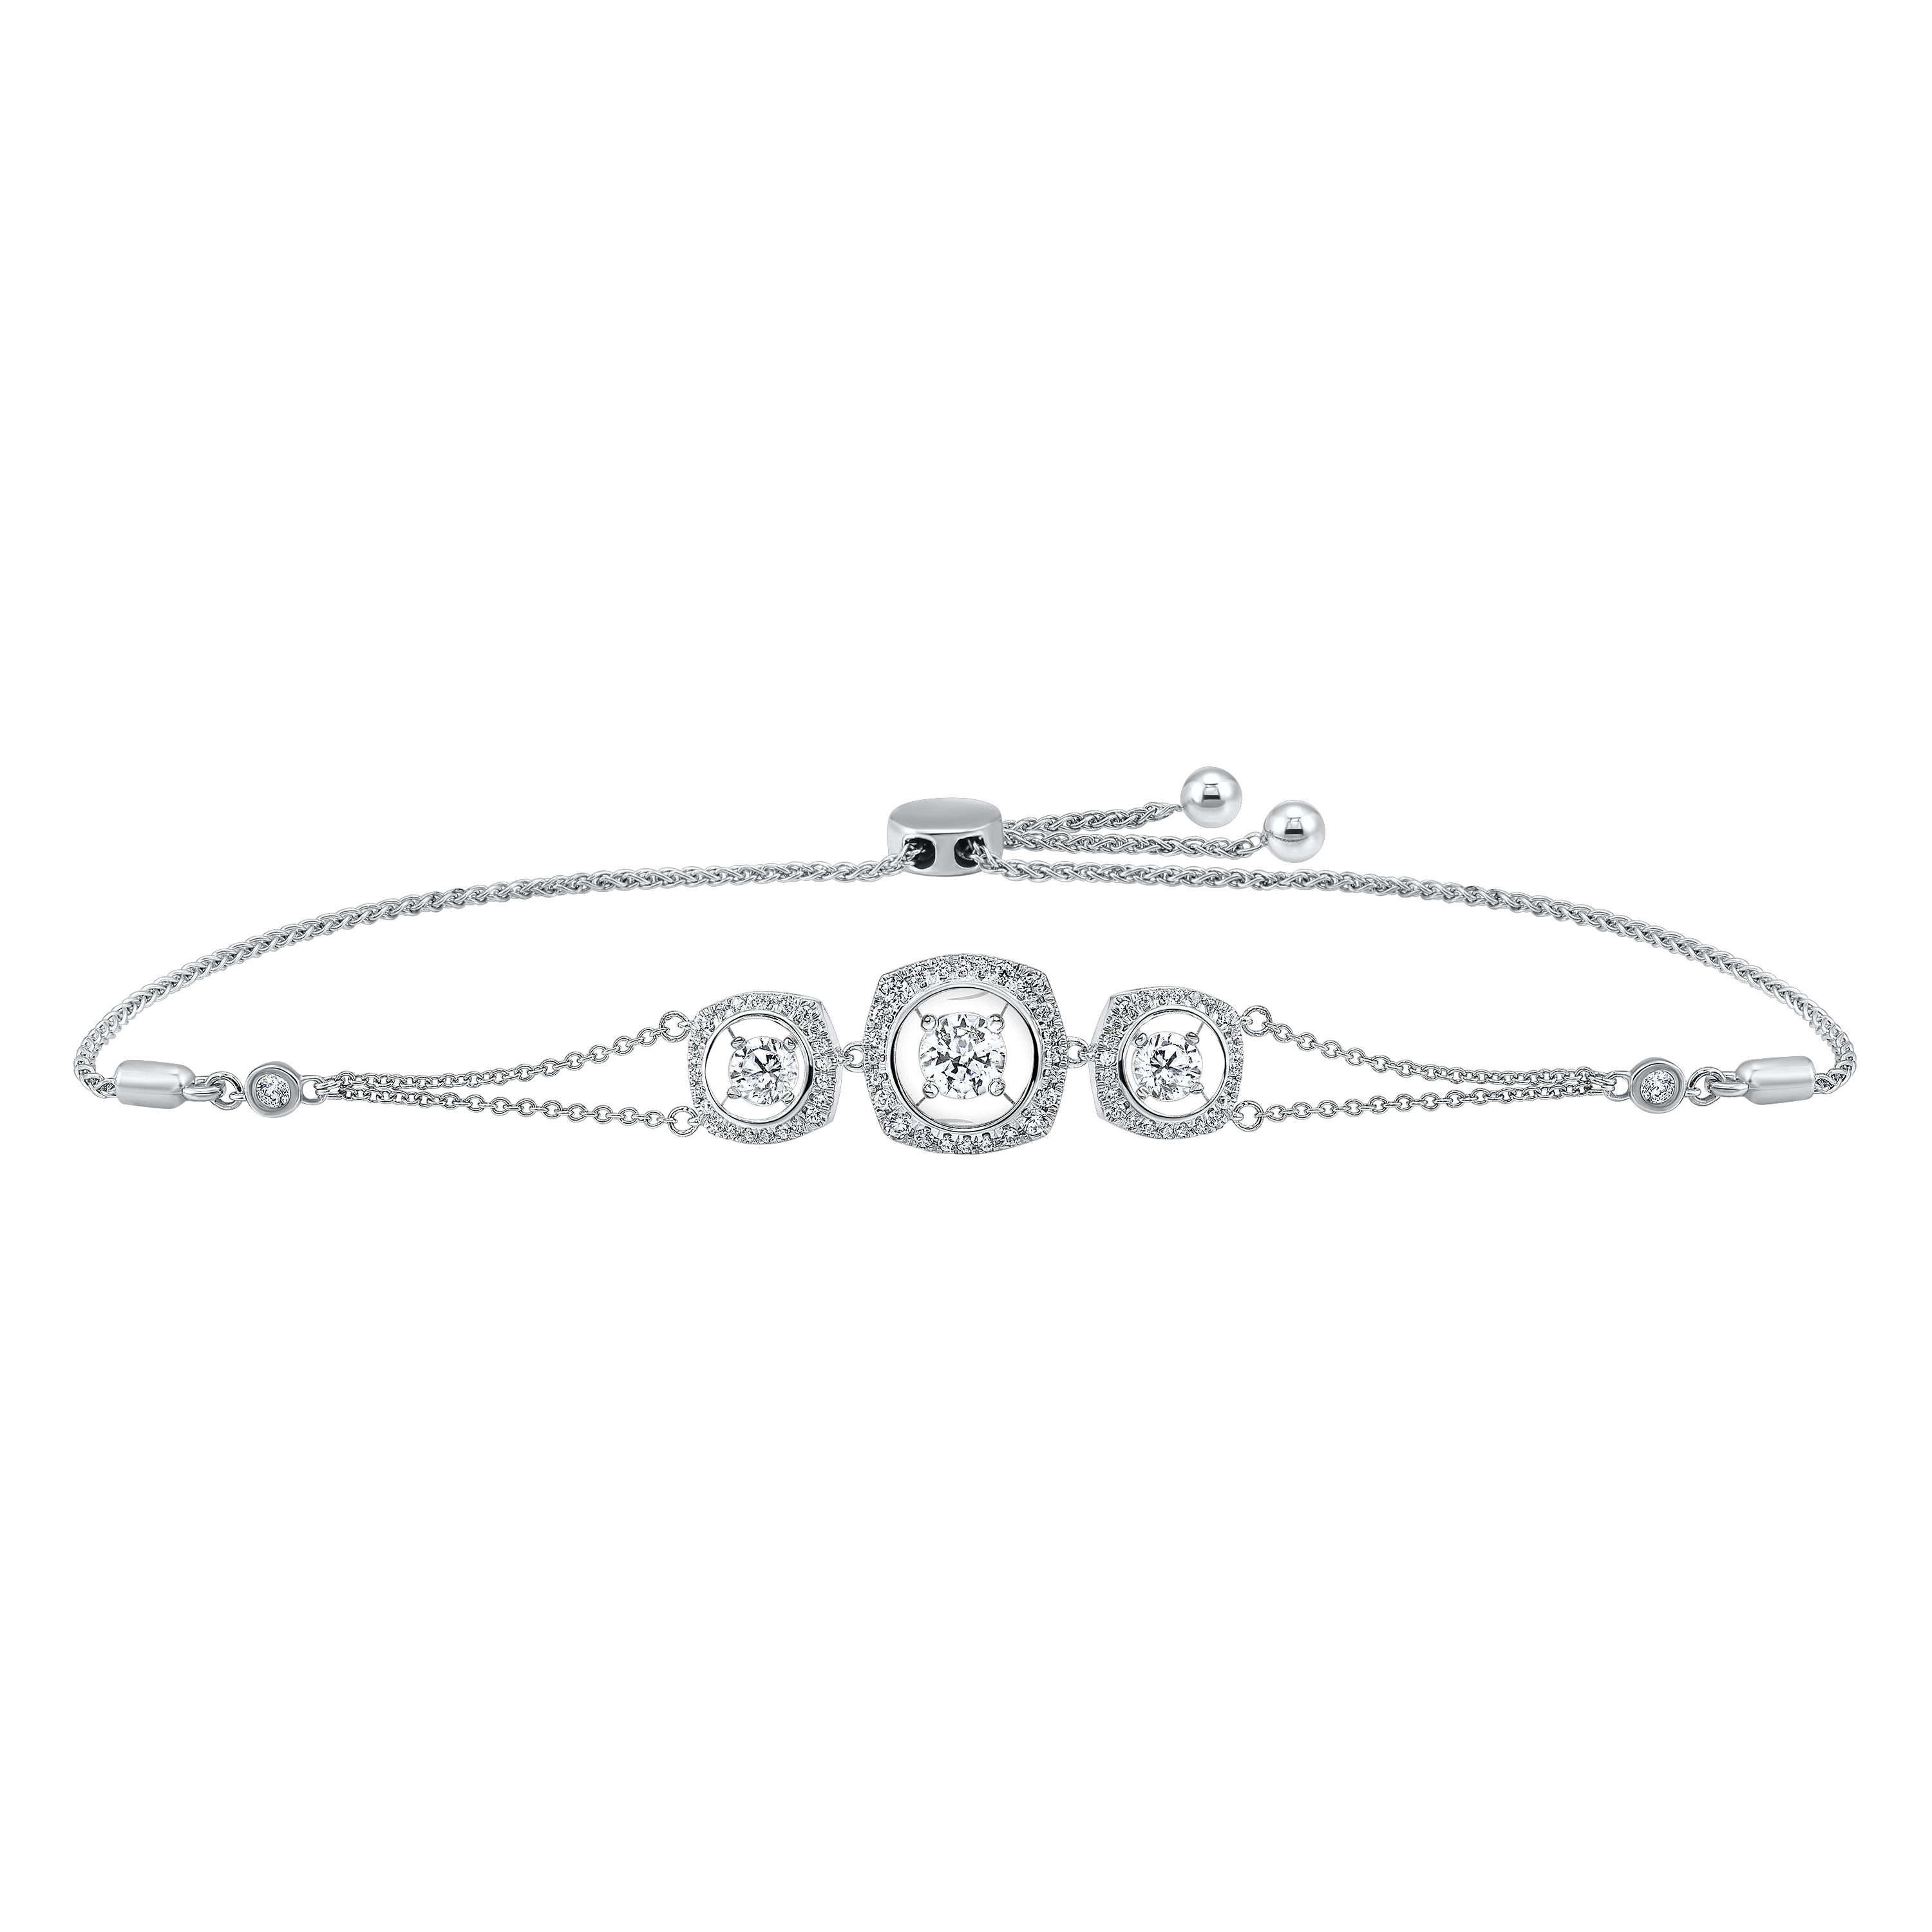 BW James Jewelers Bracelet 16 Page Christmas Catalog Offer 10KTW Diamond Bracelet 3/4 Ct